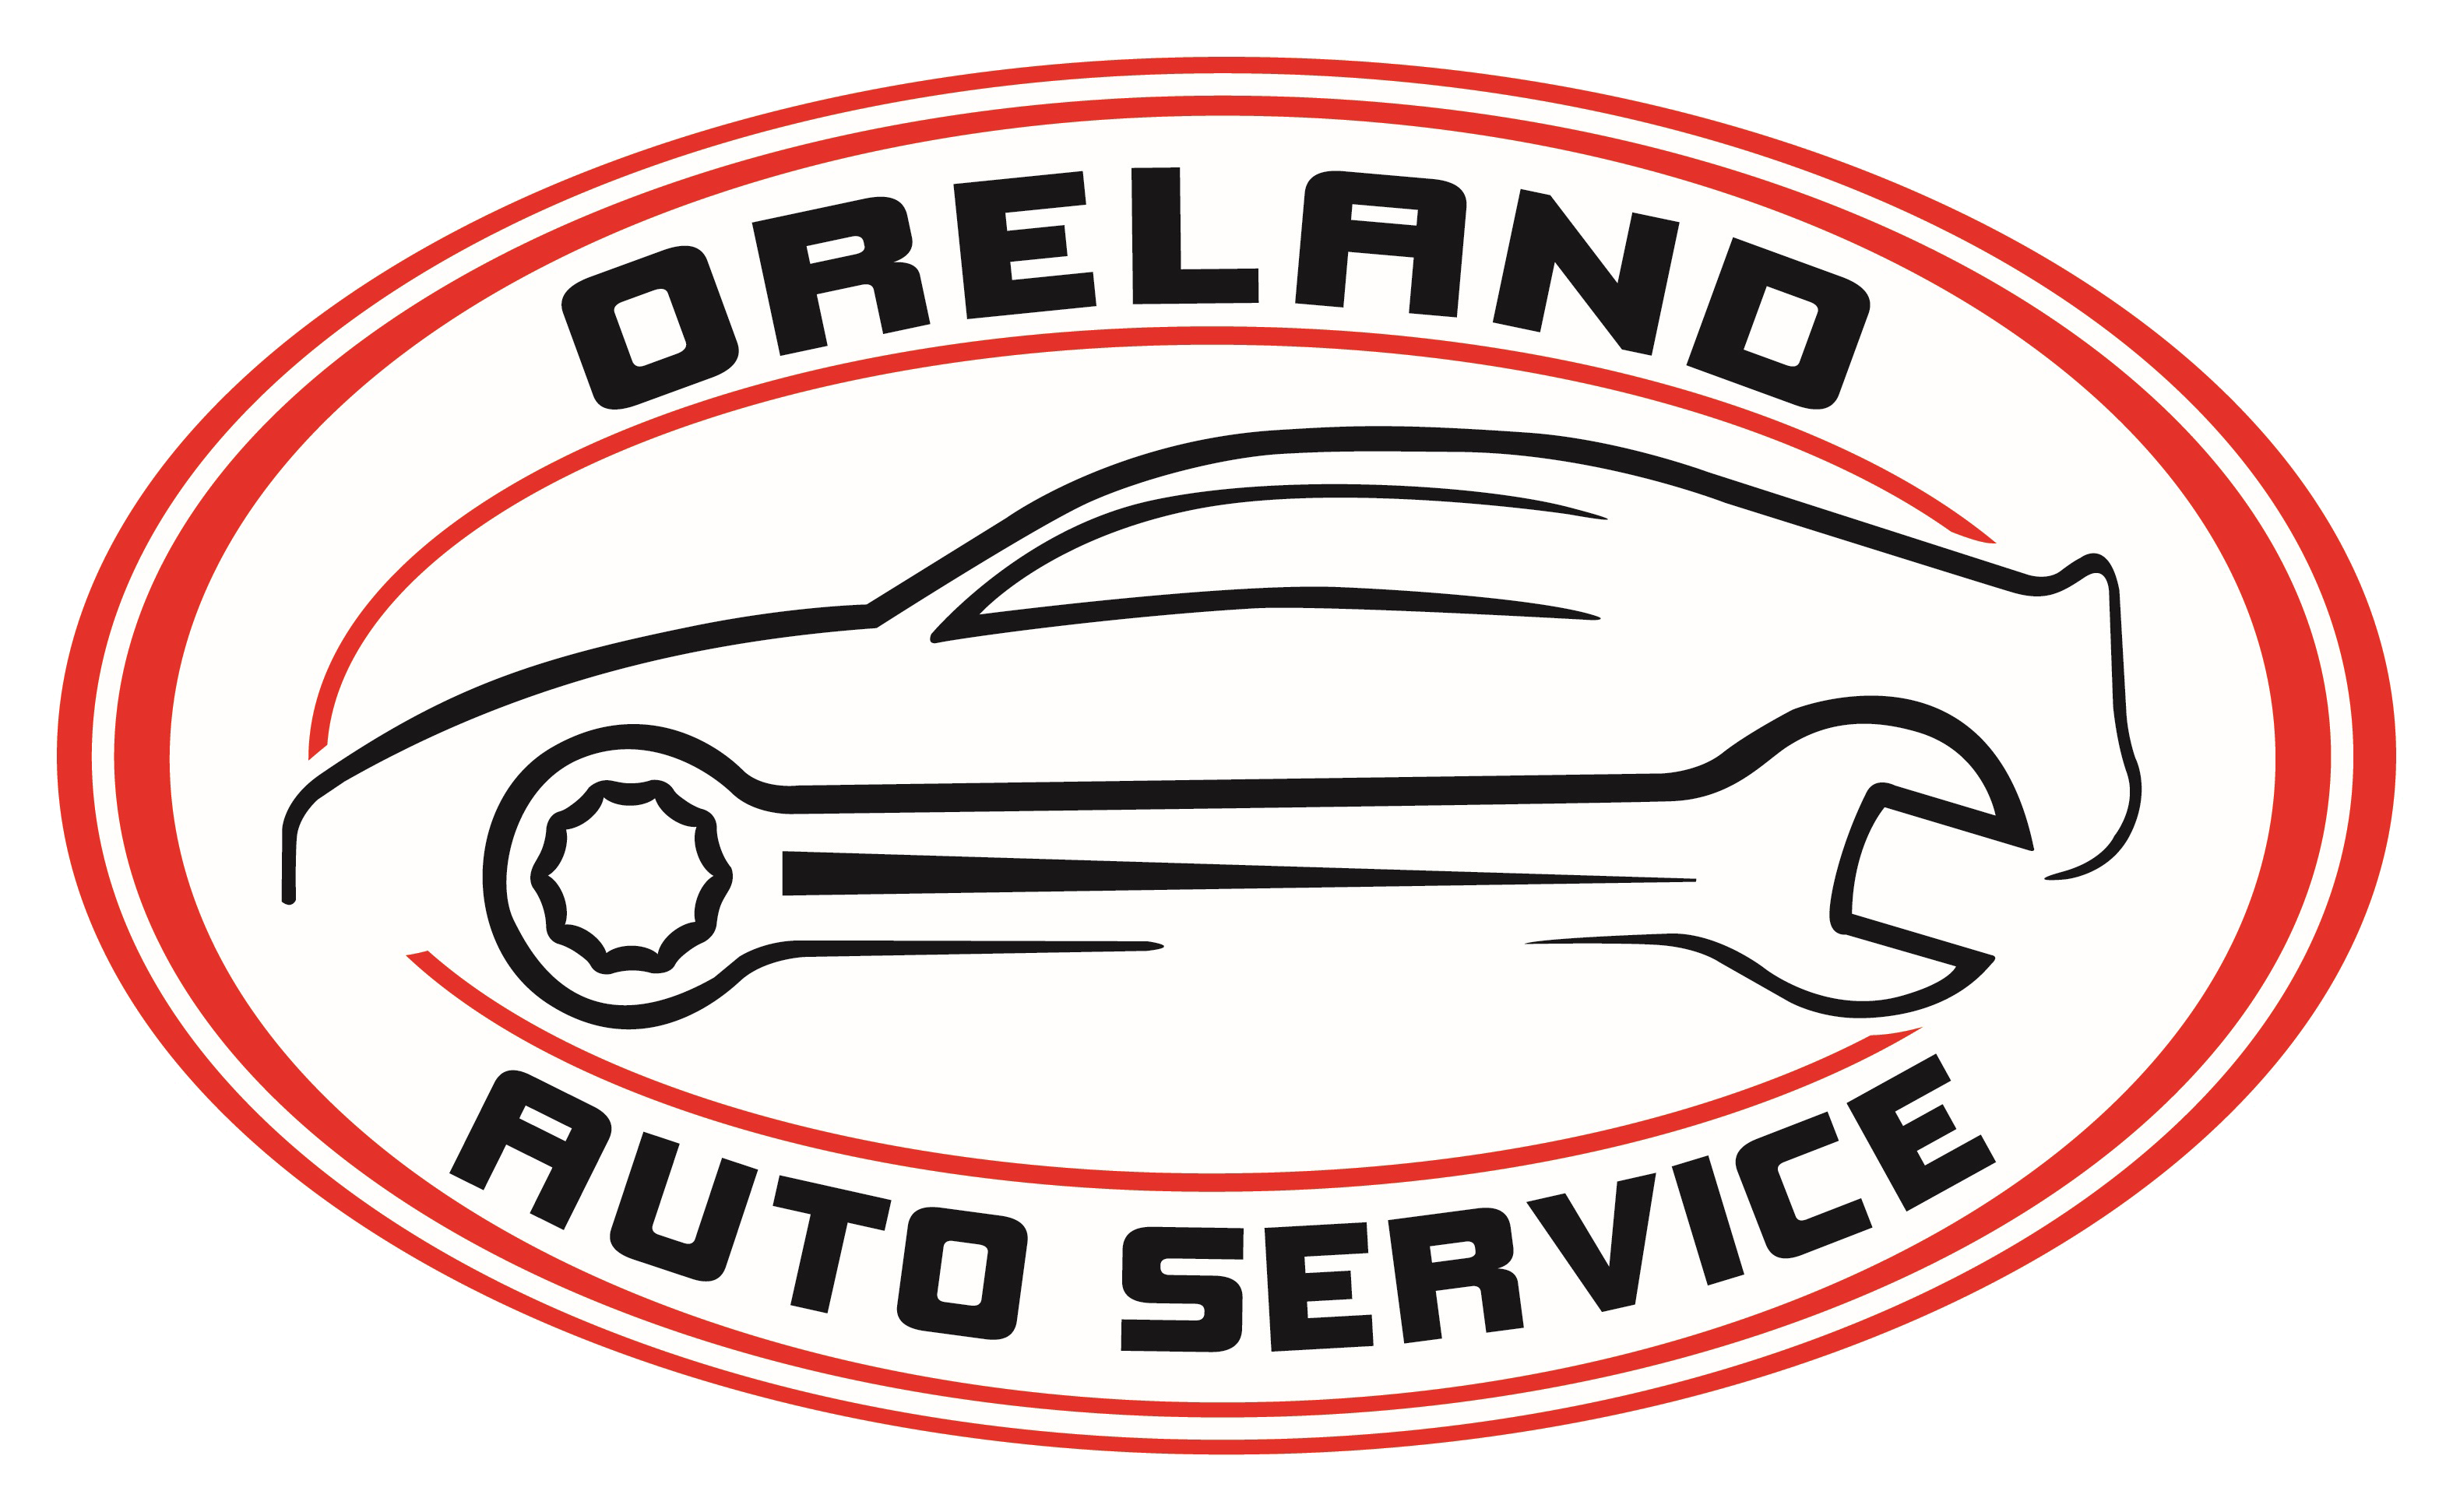 Oreland Auto Service